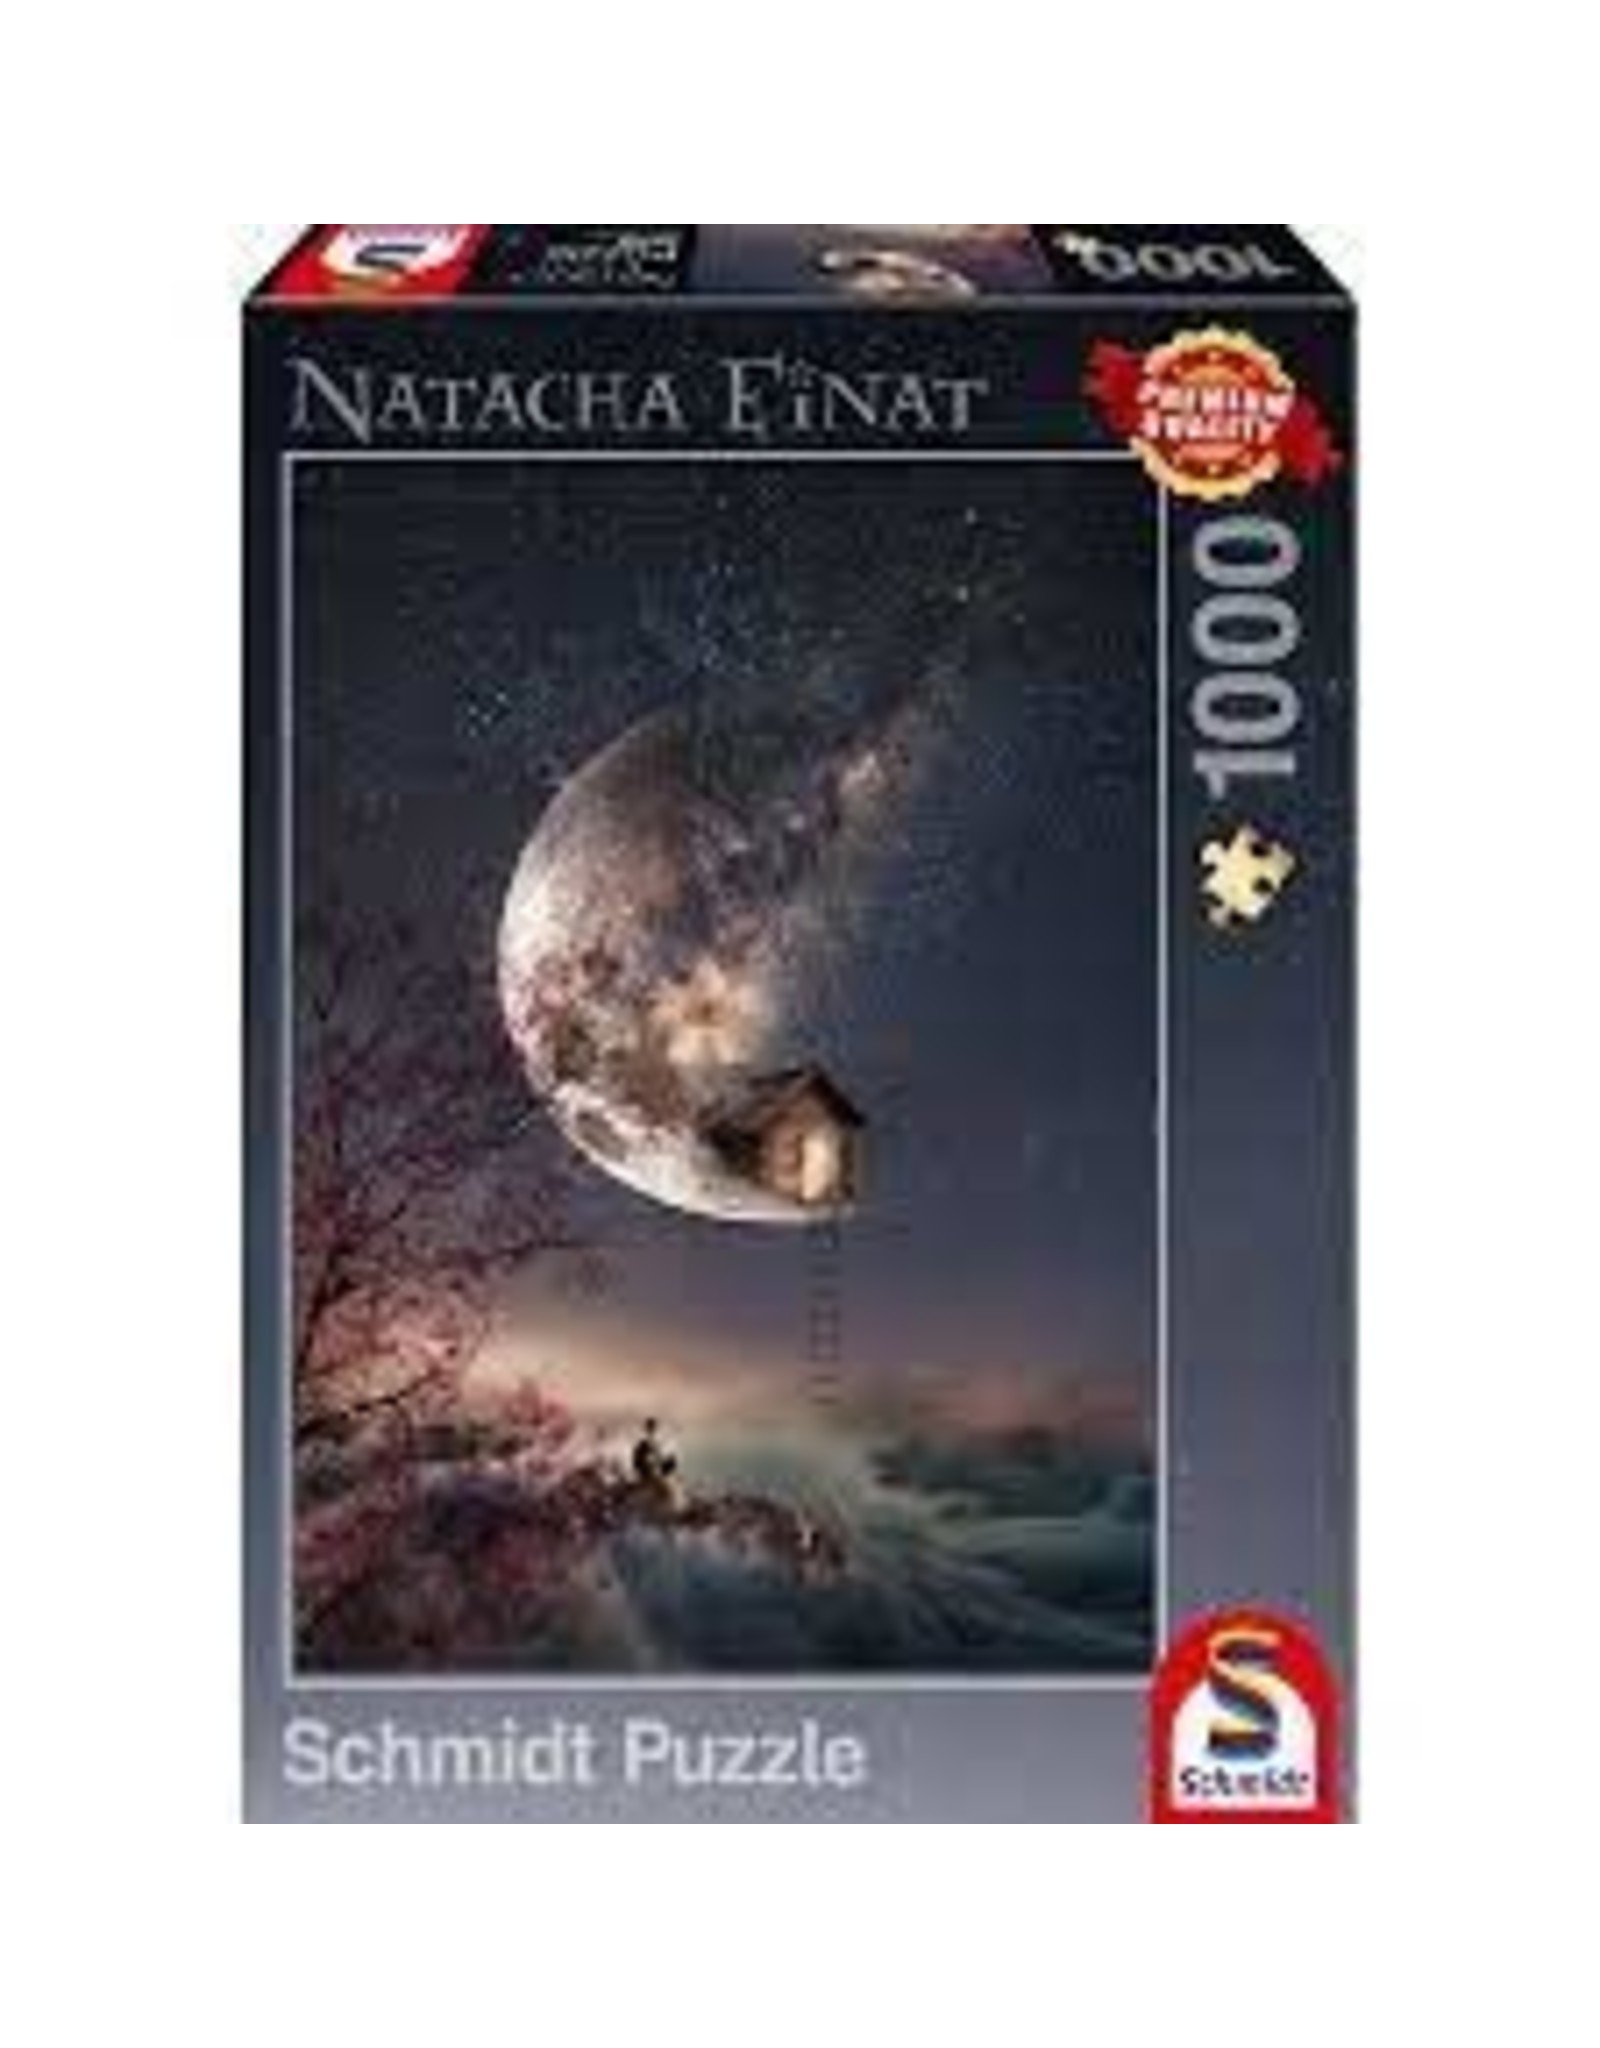 Schmidt Schmidt Puzzle: Natacha Einat: Whispered Dream 1000 Pcs